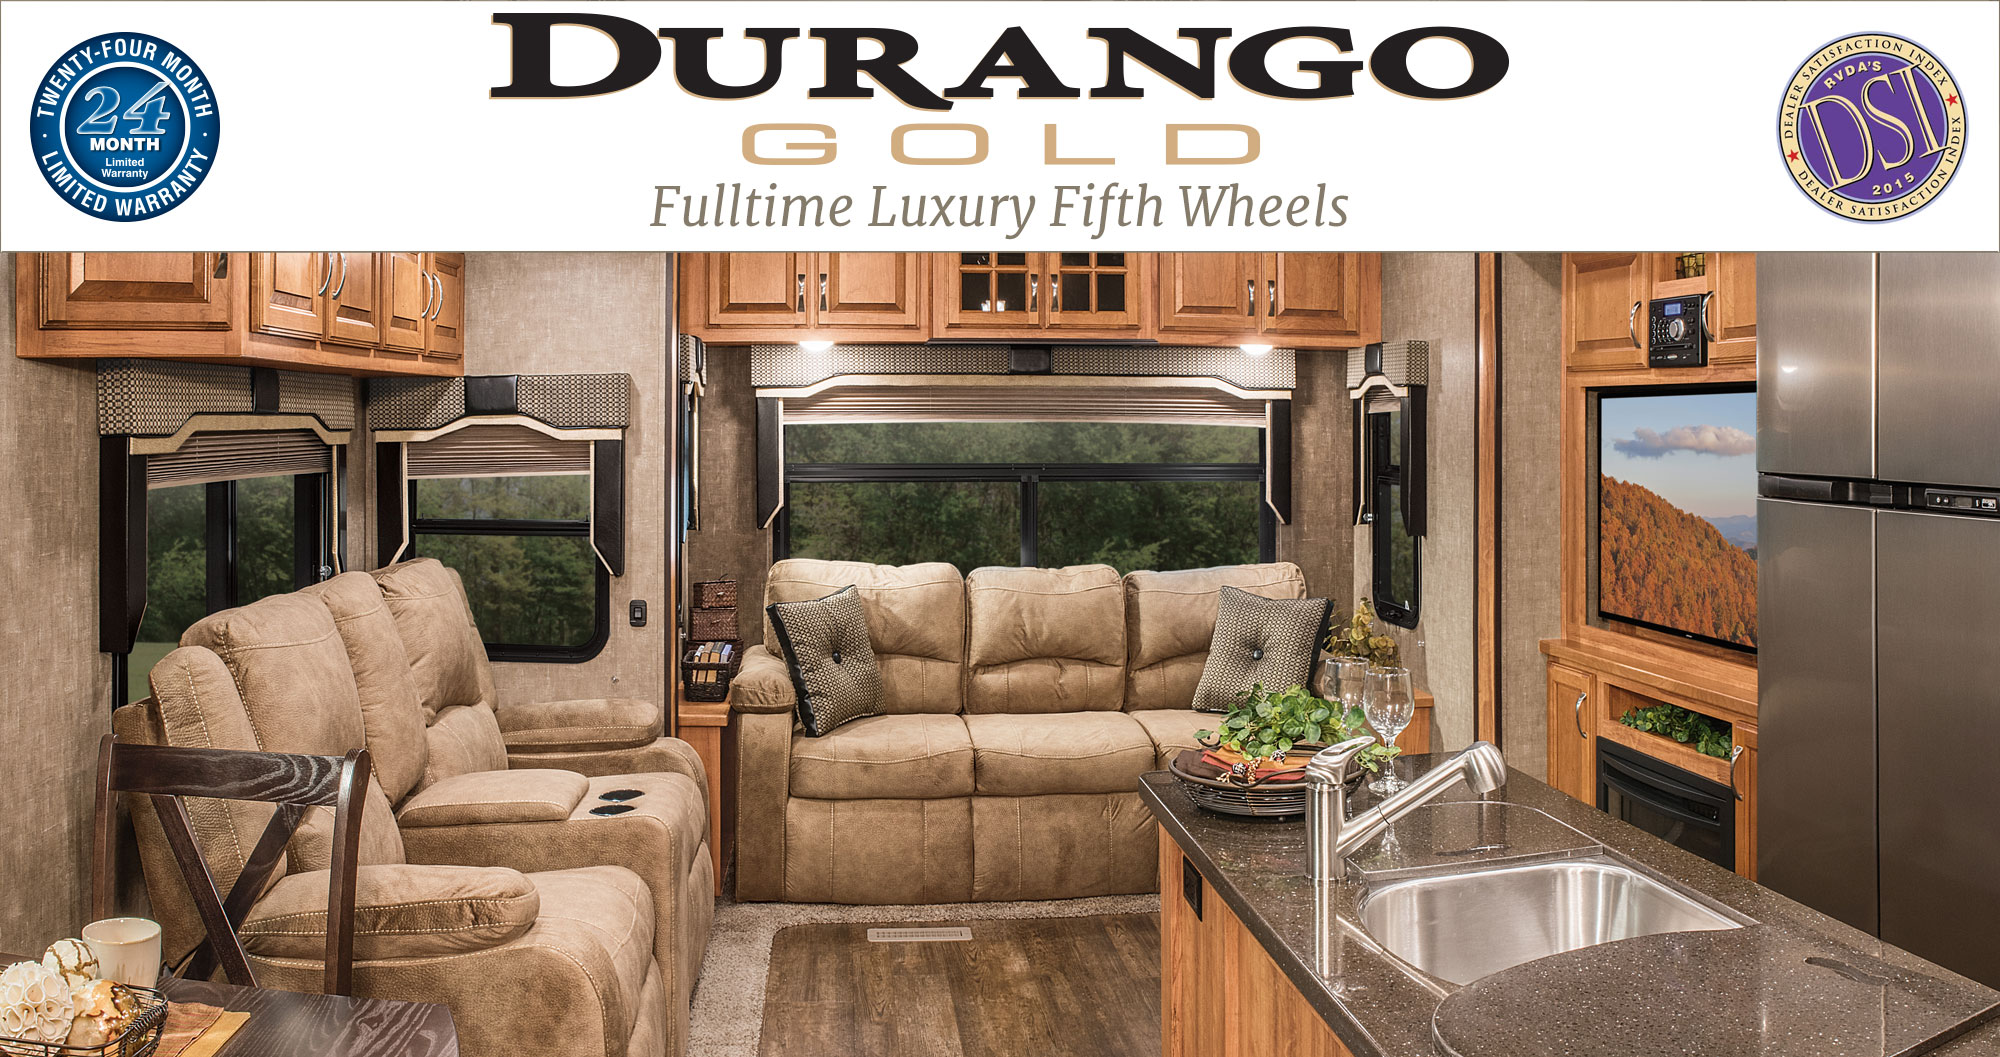 KZ RV Durango Gold Fulltime Luxury Fifth Wheels Introduction